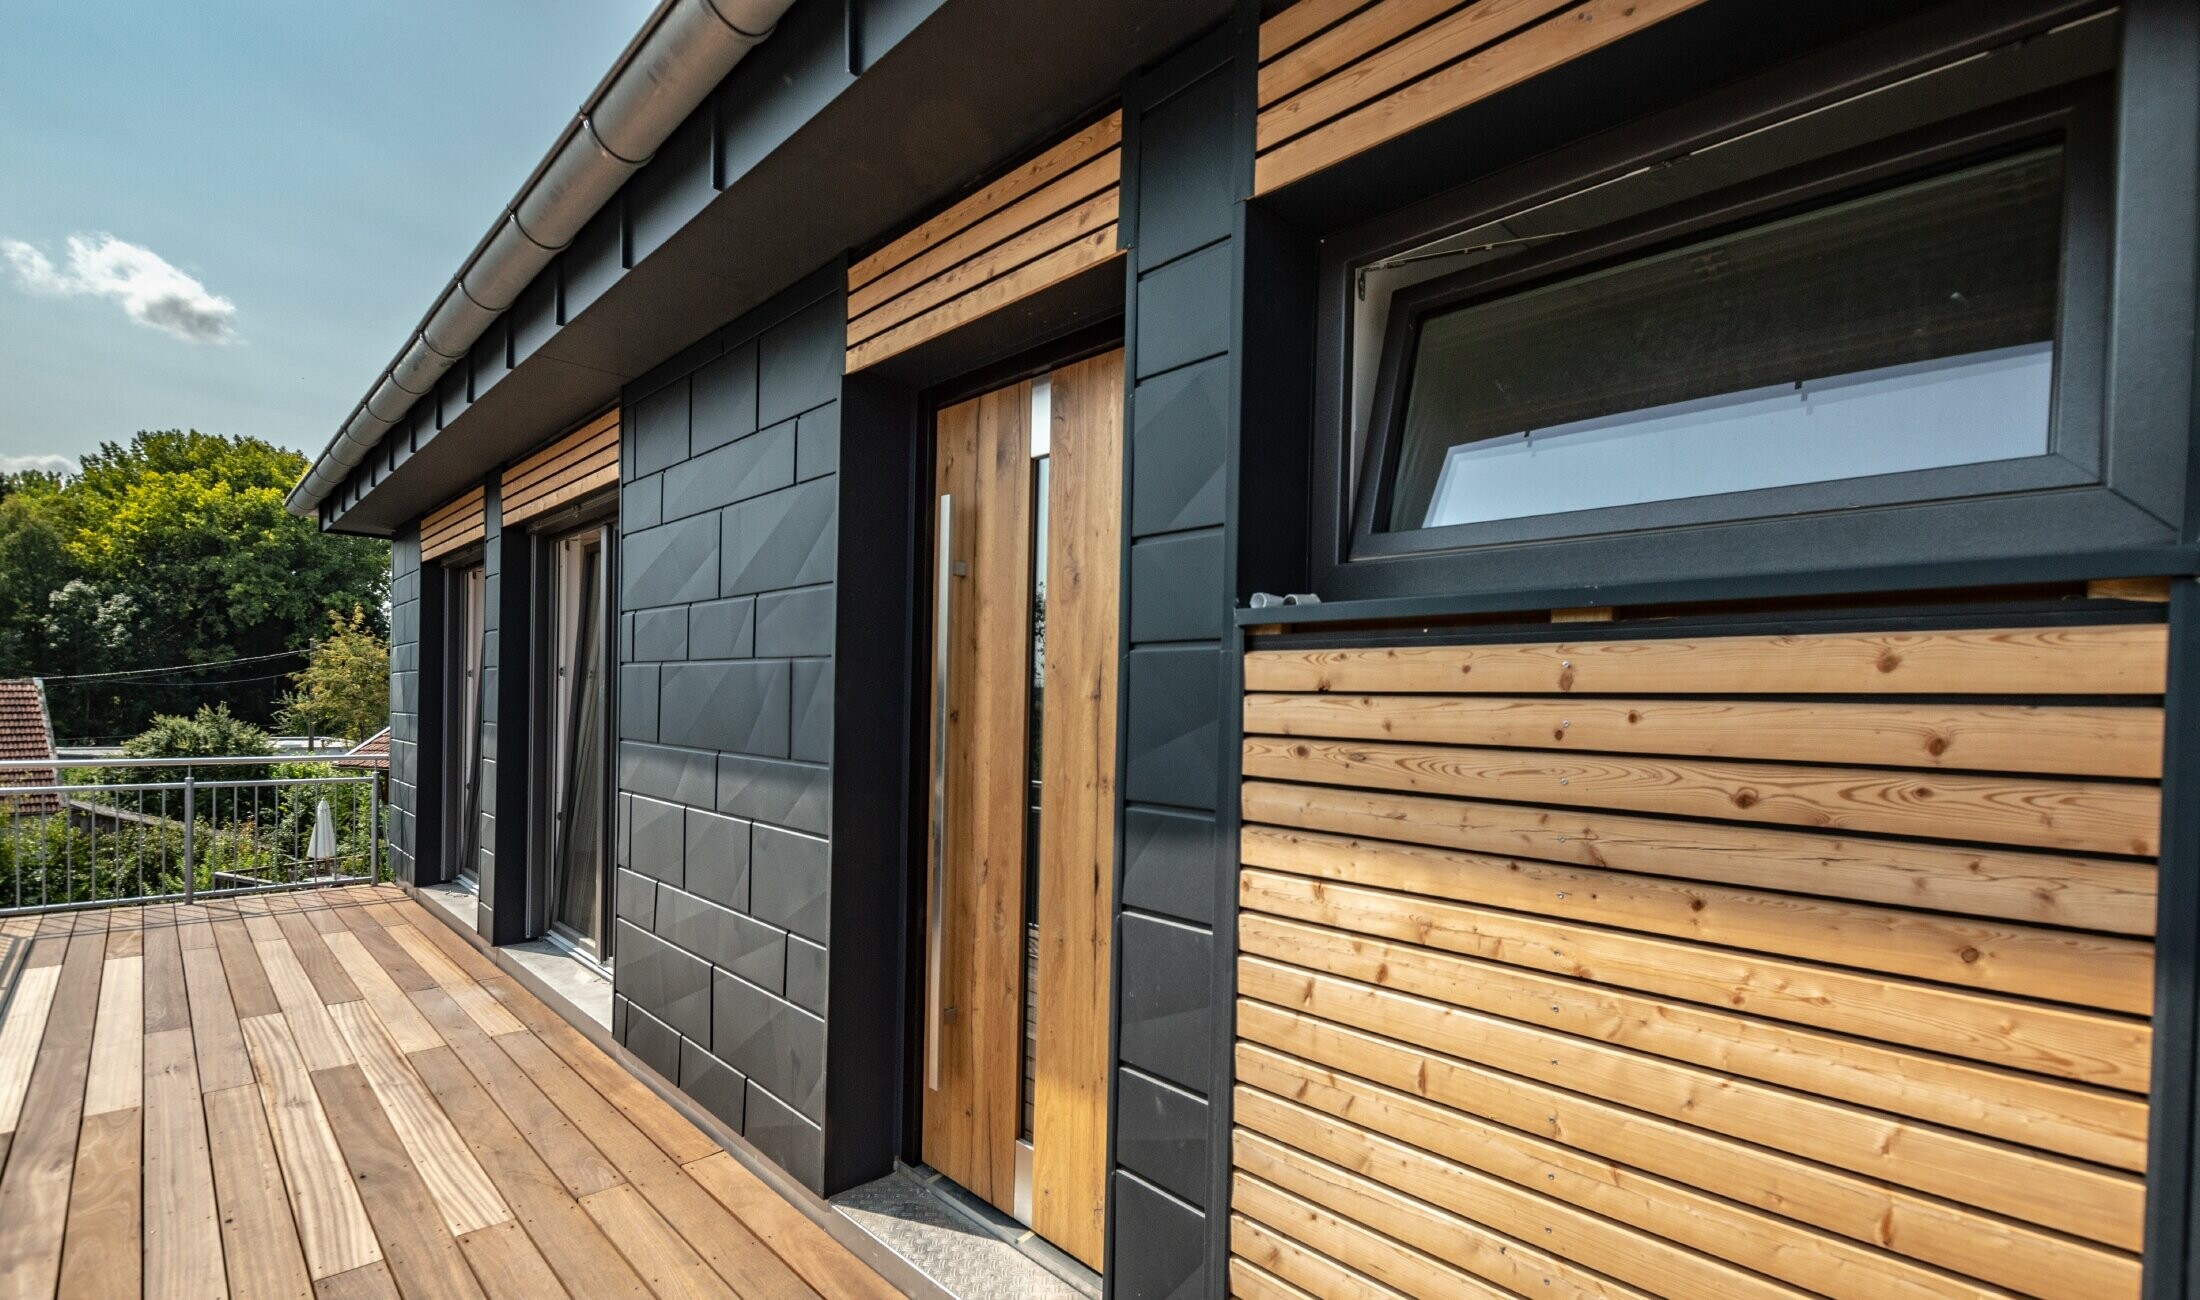 Oblikovanje fasade kombinacijom materijala aluminija - PREFA Siding.X u antracit boji - i horizontalnih drvenih letvi.